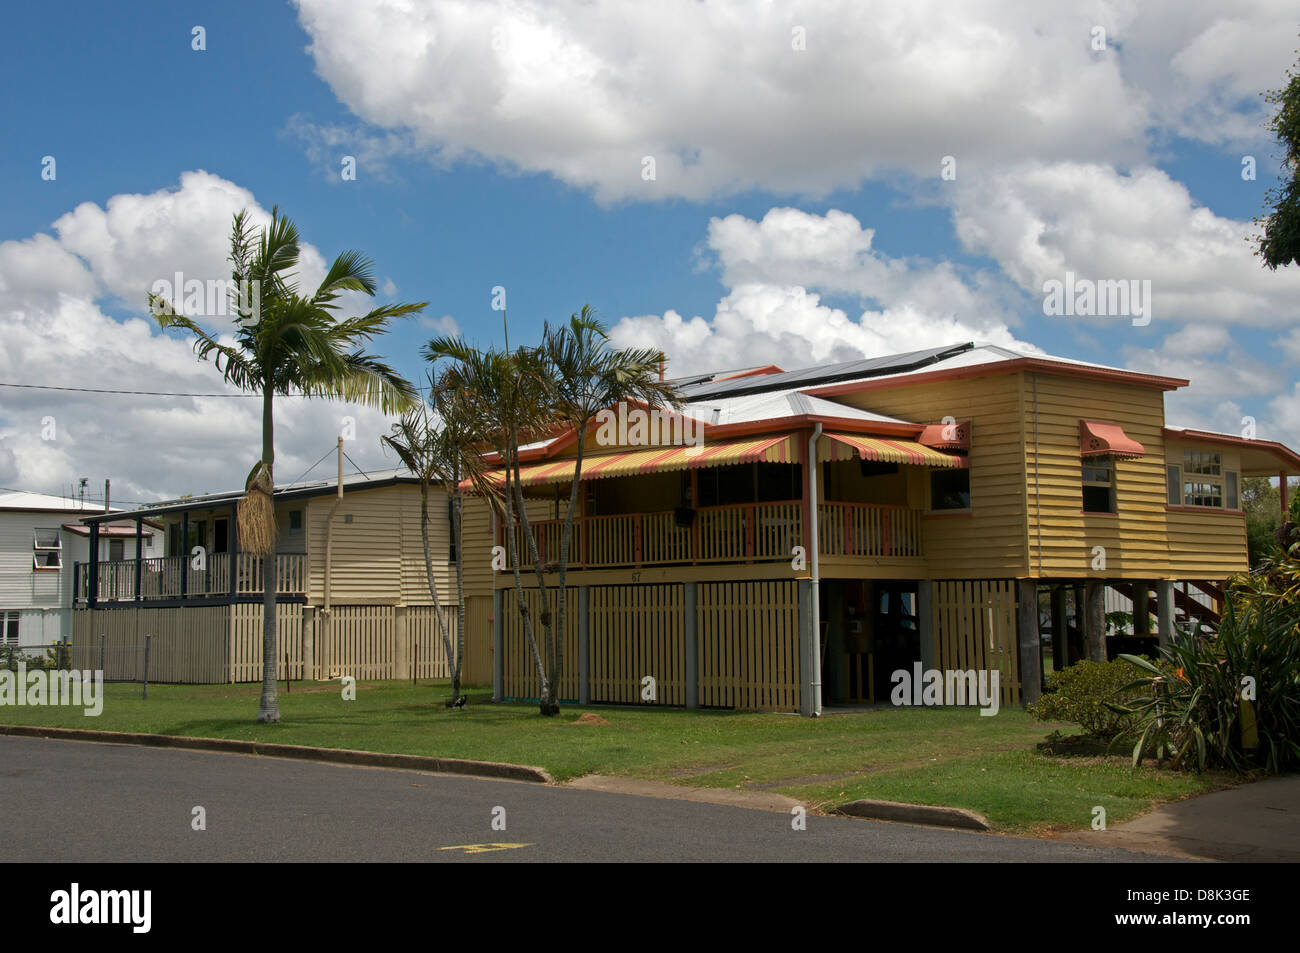 Typical stilt houses for prevention against flooding Burrum Heads Queensland Australia Stock Photo